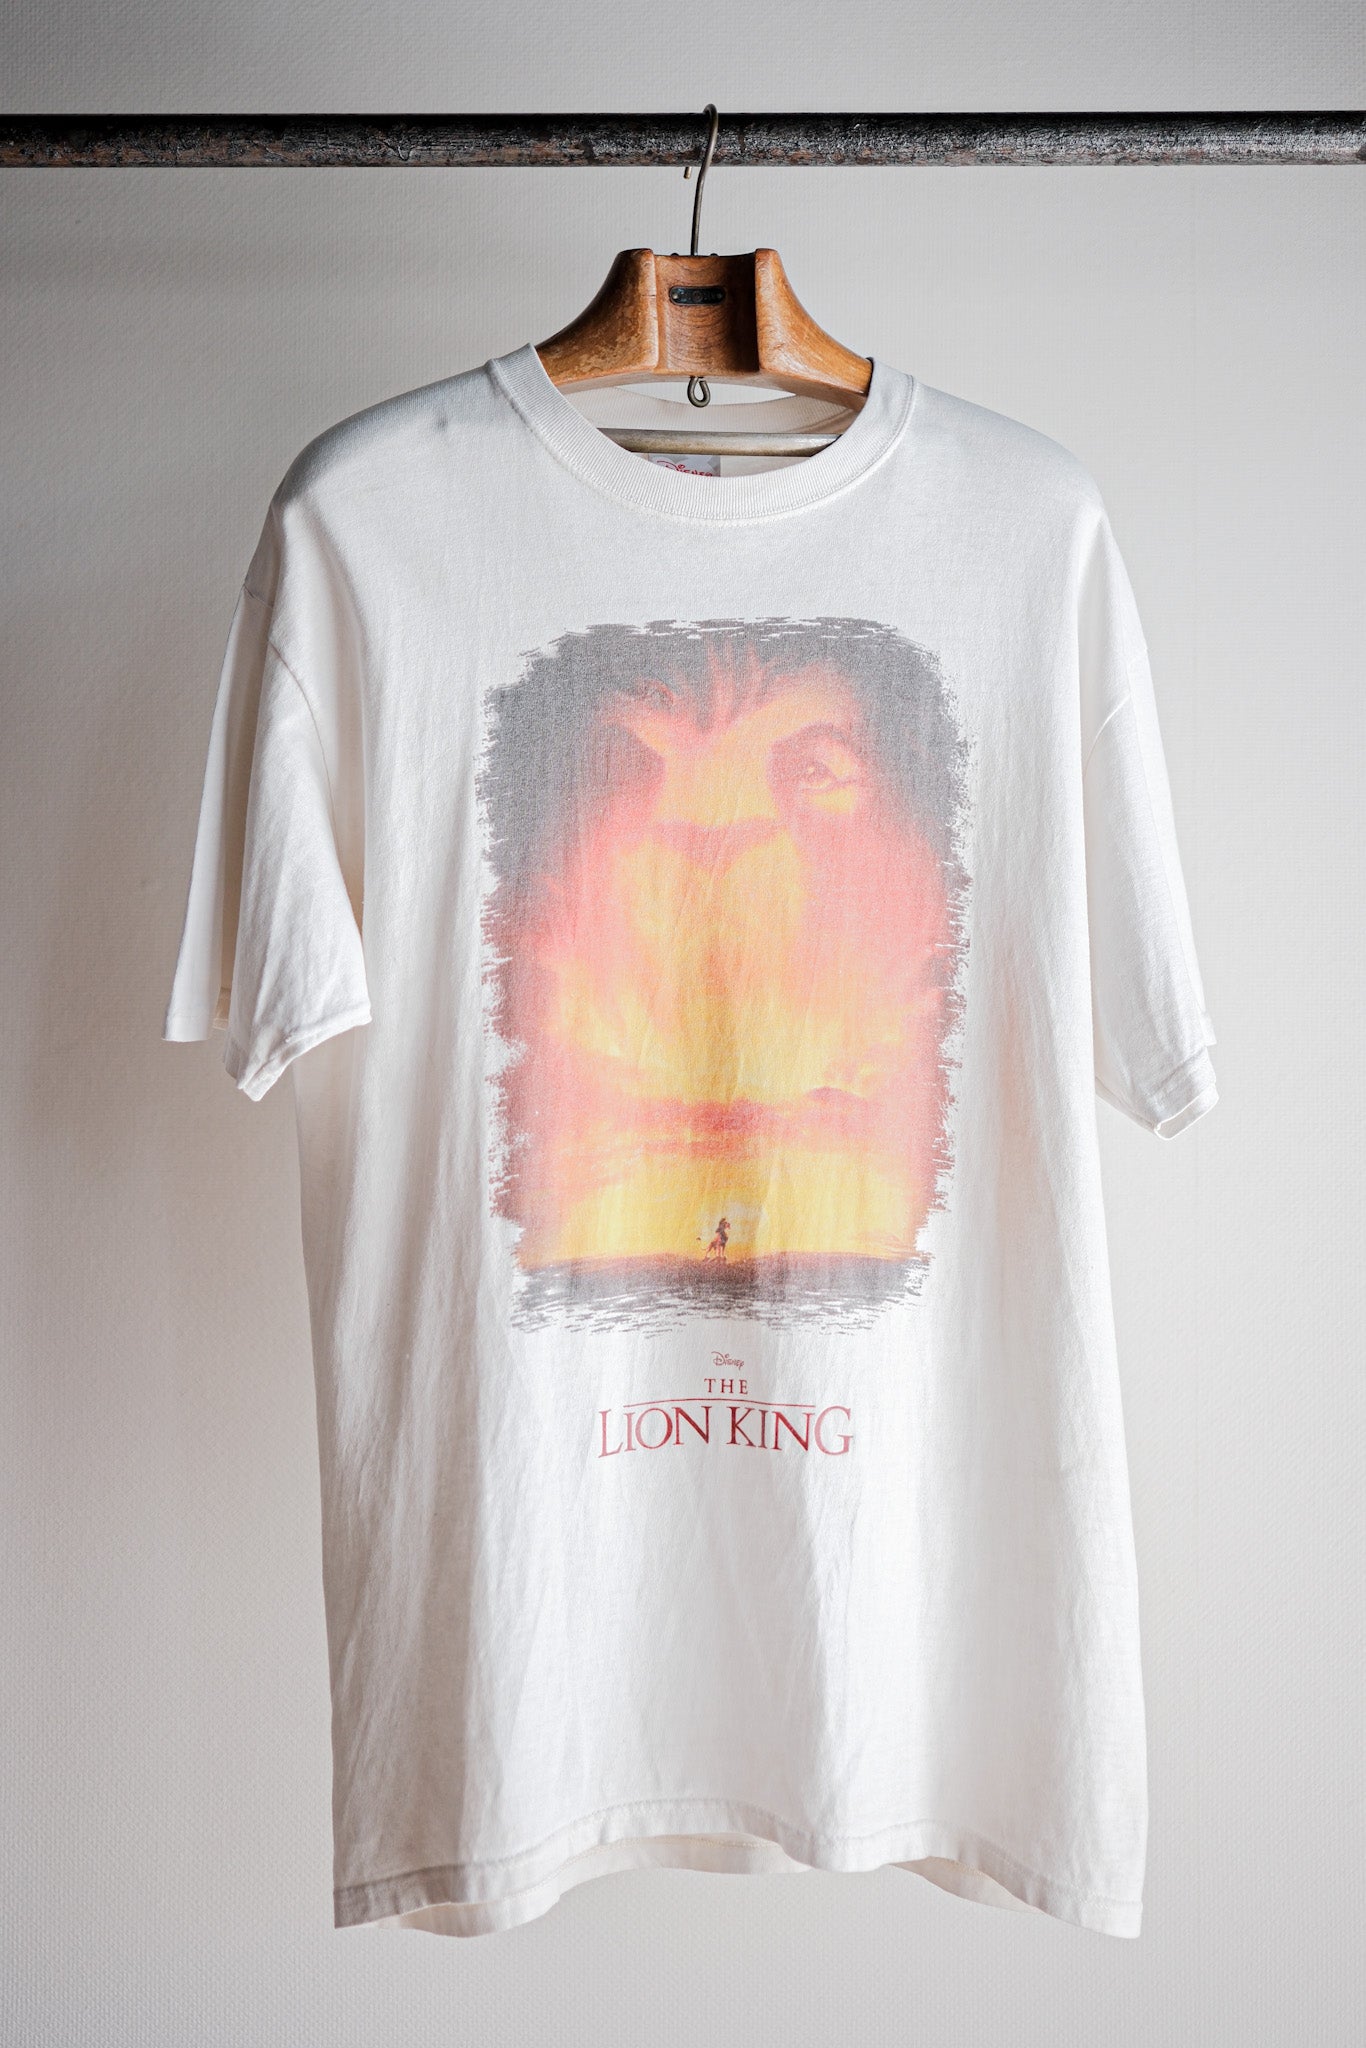 【~00's】Vintage Disney Print T-shirt Size.L "The Lion King"